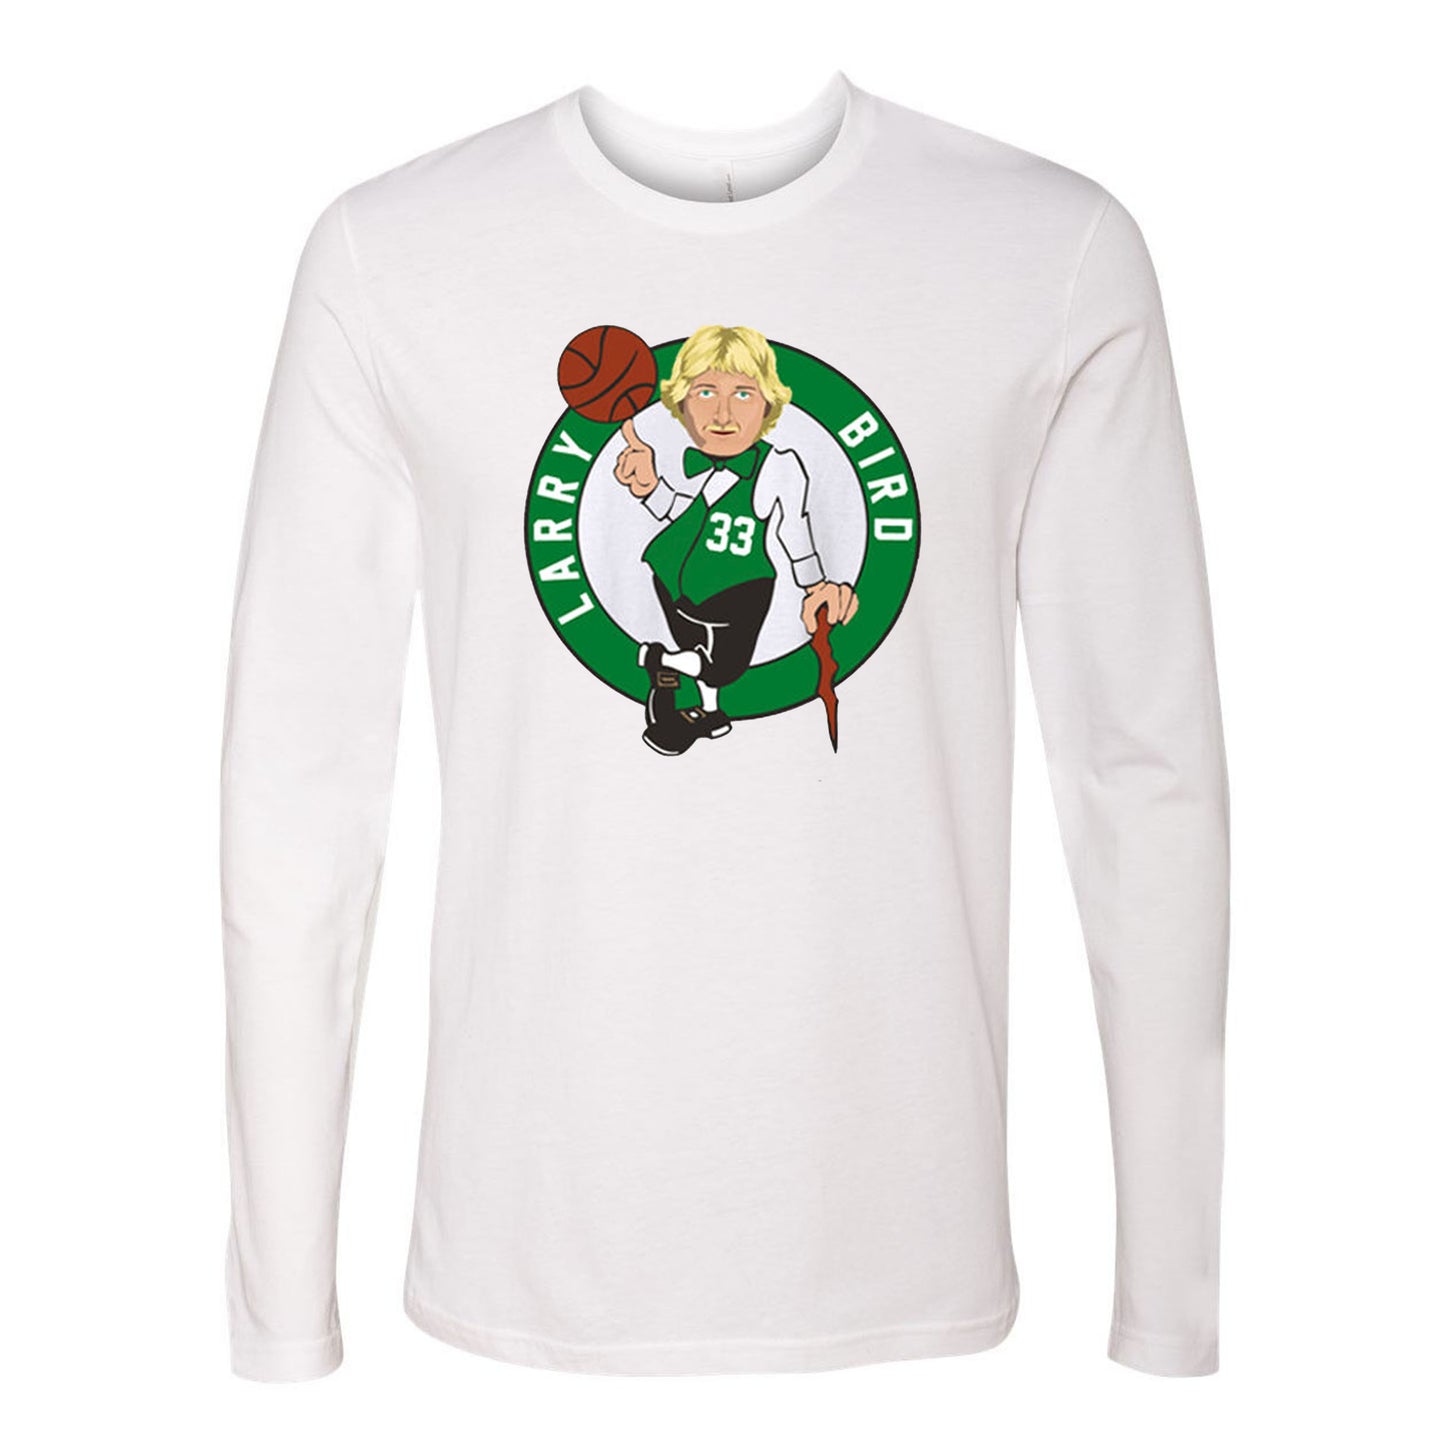 Boston Larry Bird Logo Graphic Shirt For Boston Basketball Team